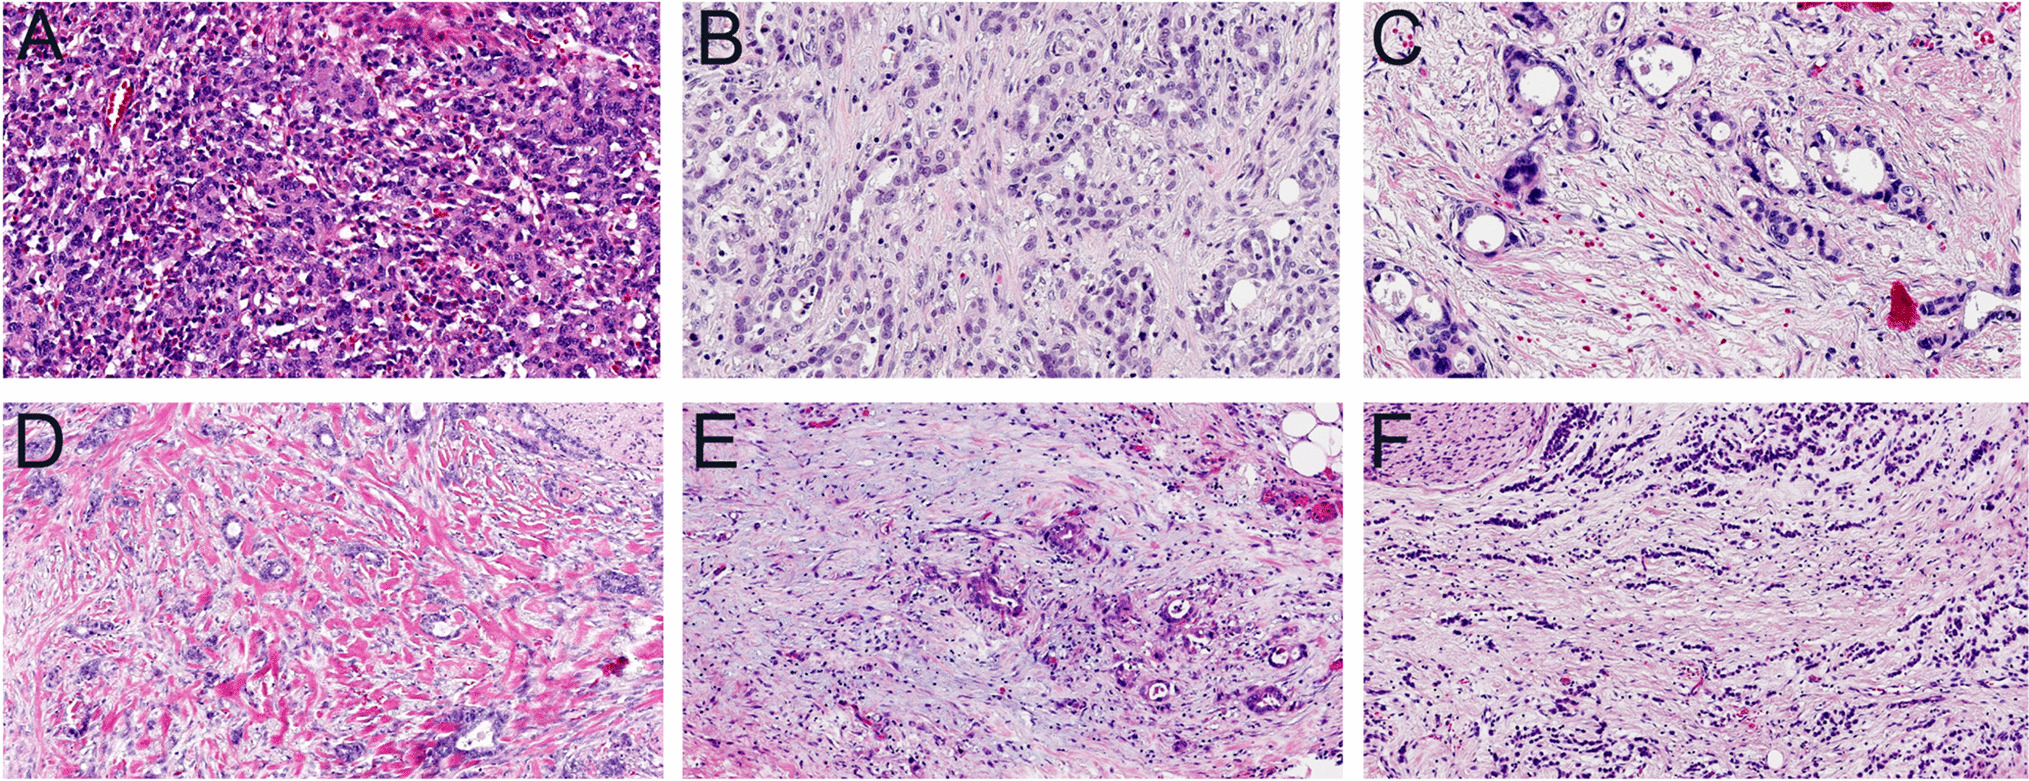 Tumor stroma ratio, tumor stroma maturity, tumor-infiltrating immune cells in relation to prognosis, and neoadjuvant therapy response in esophagogastric junction adenocarcinoma